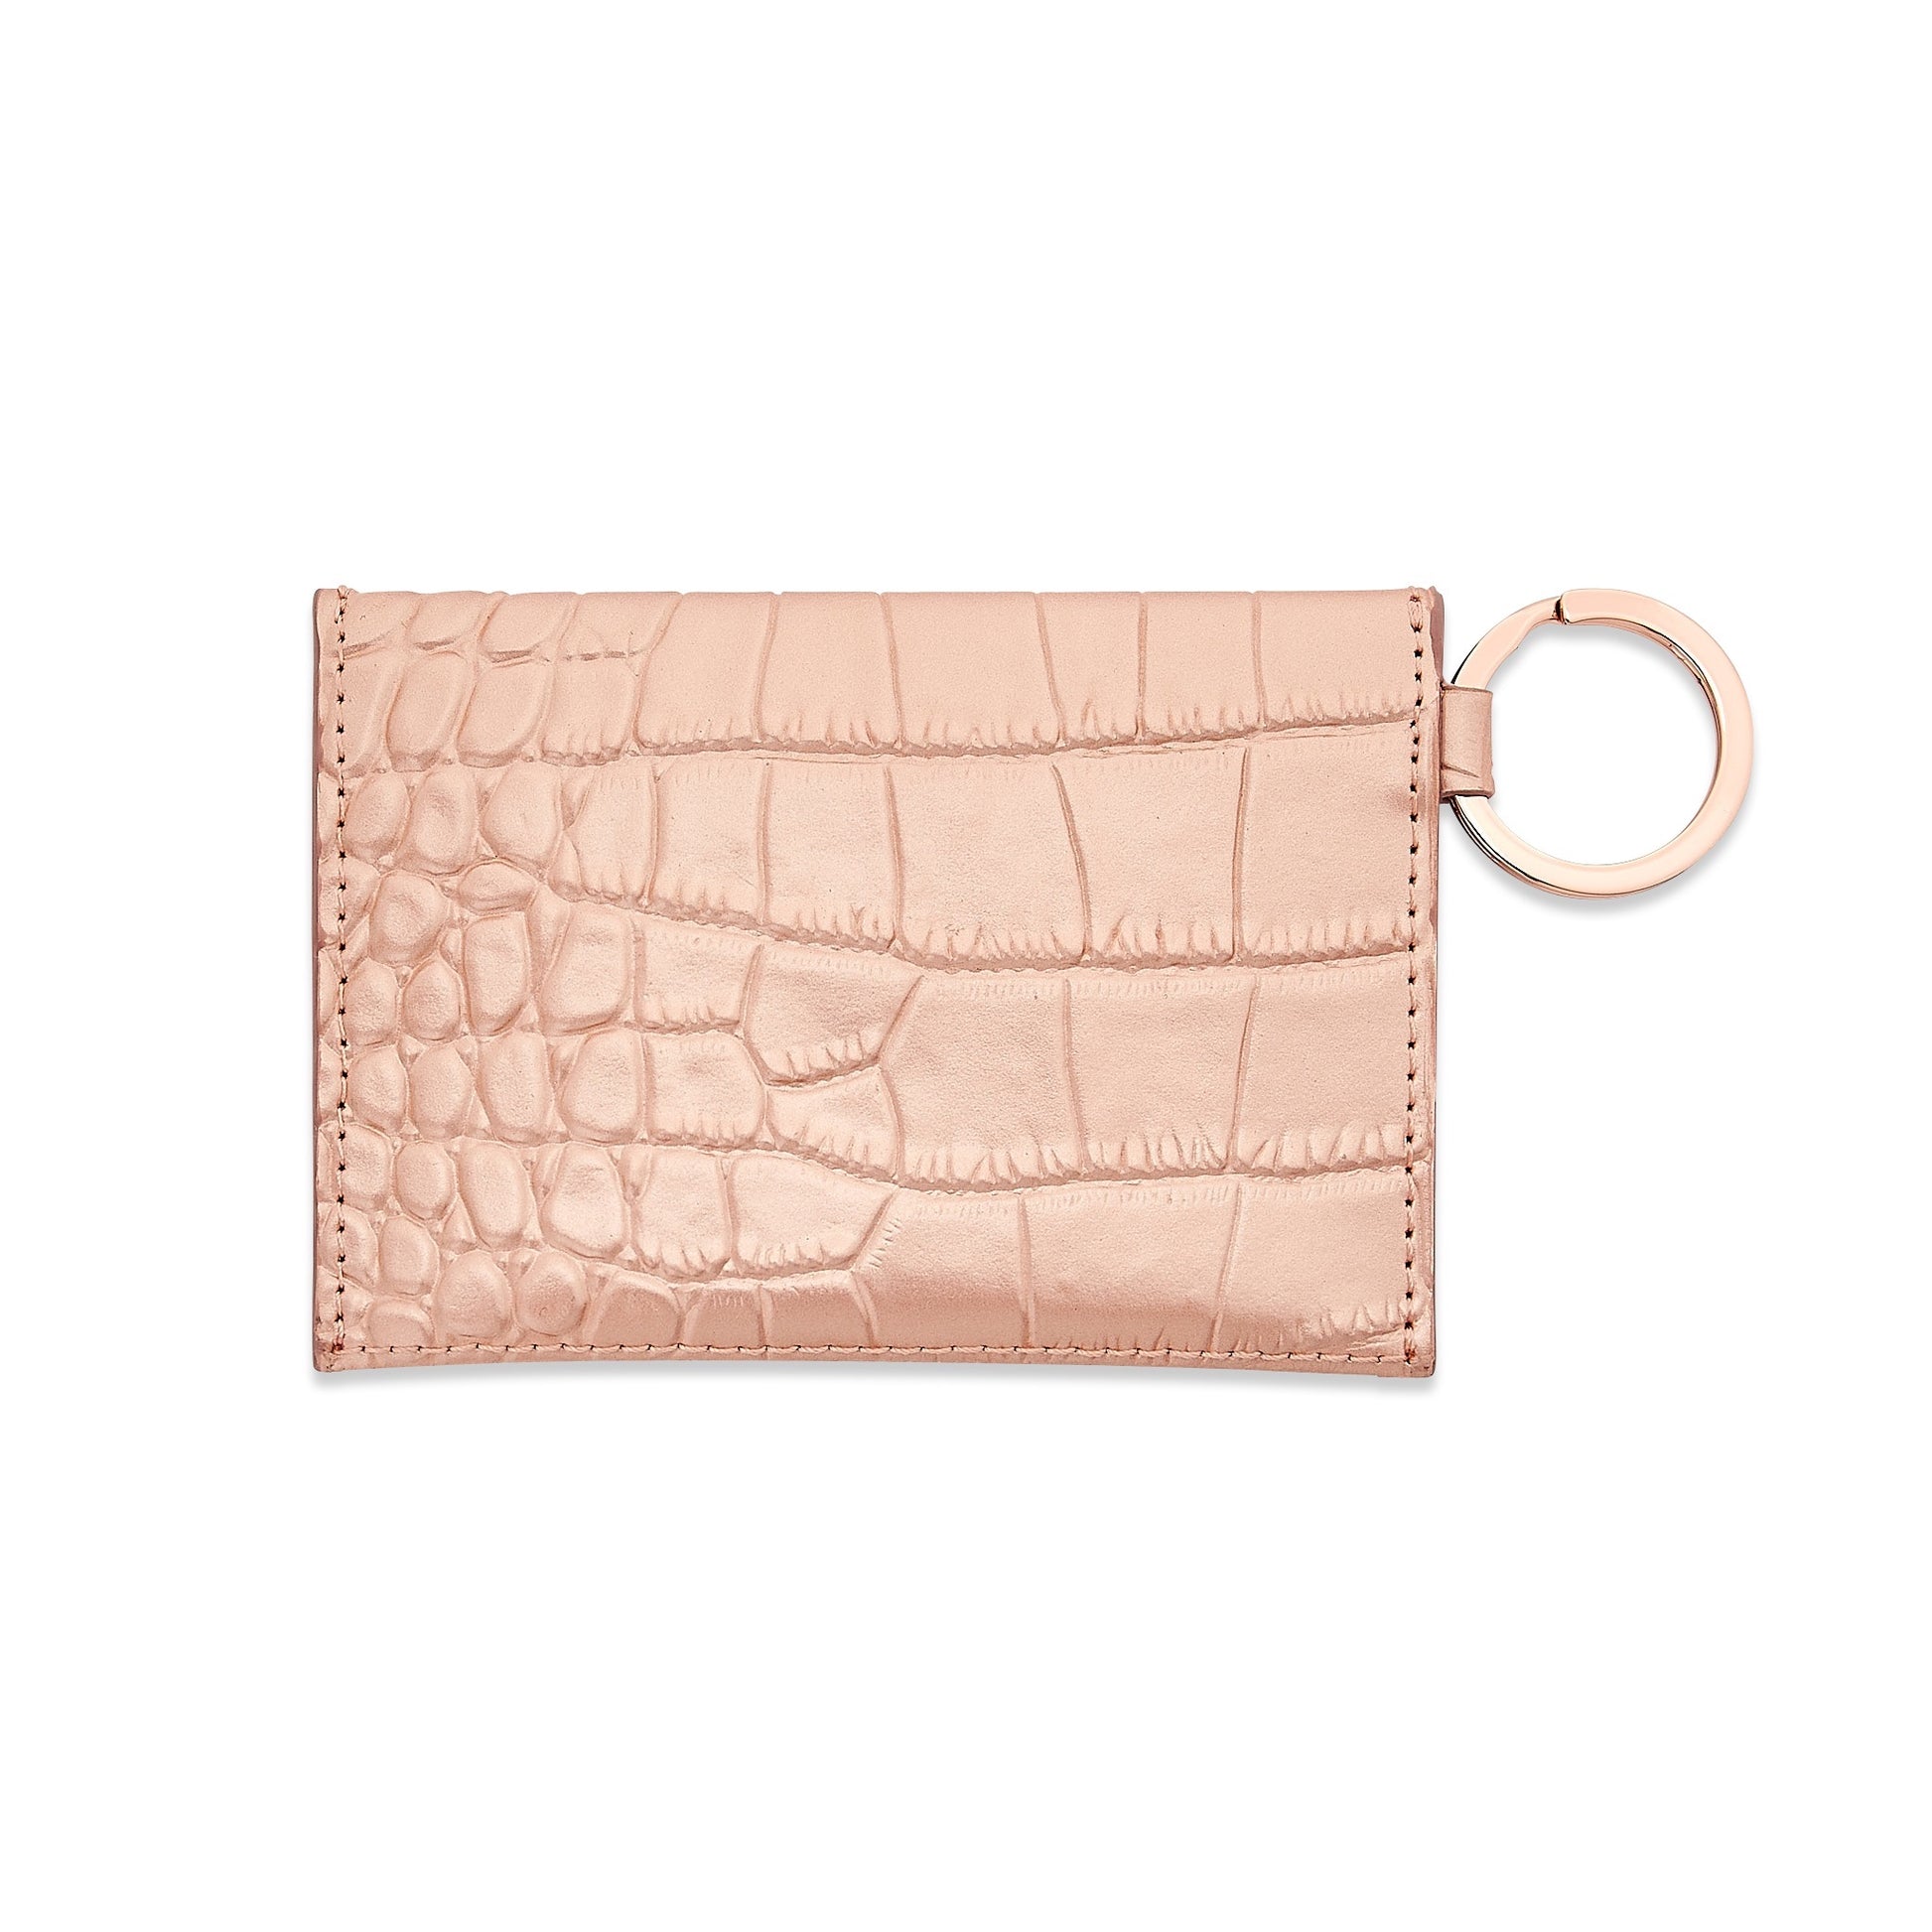 Stylish leather keychain wallet in mini envelope design backside.